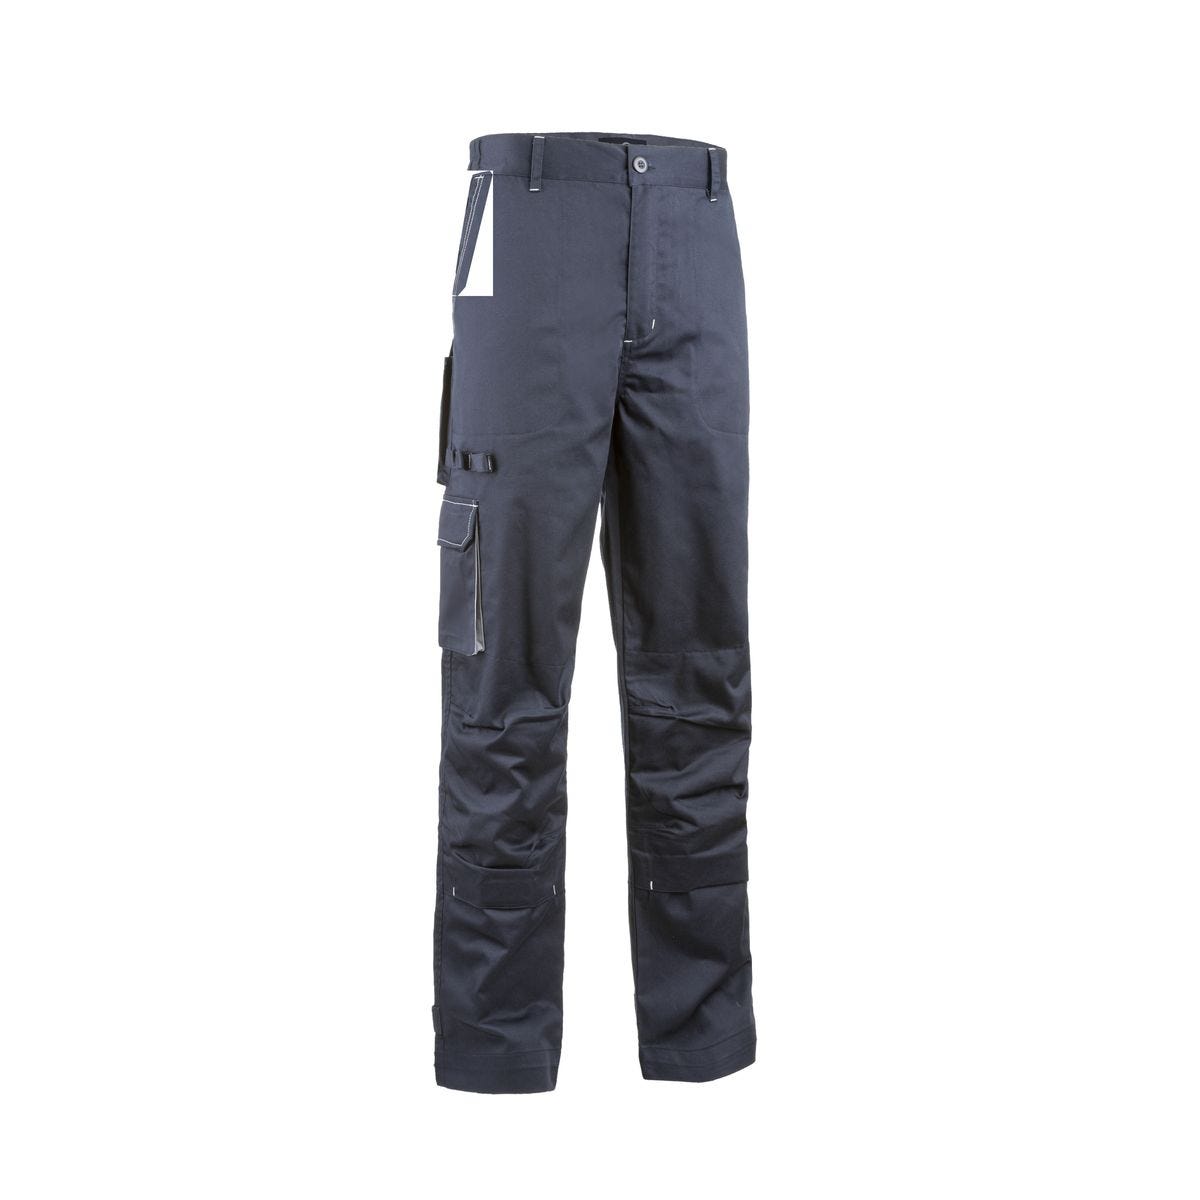 Pantalon NAVY II marine/gris - COVERGUARD - Taille 3XL 0